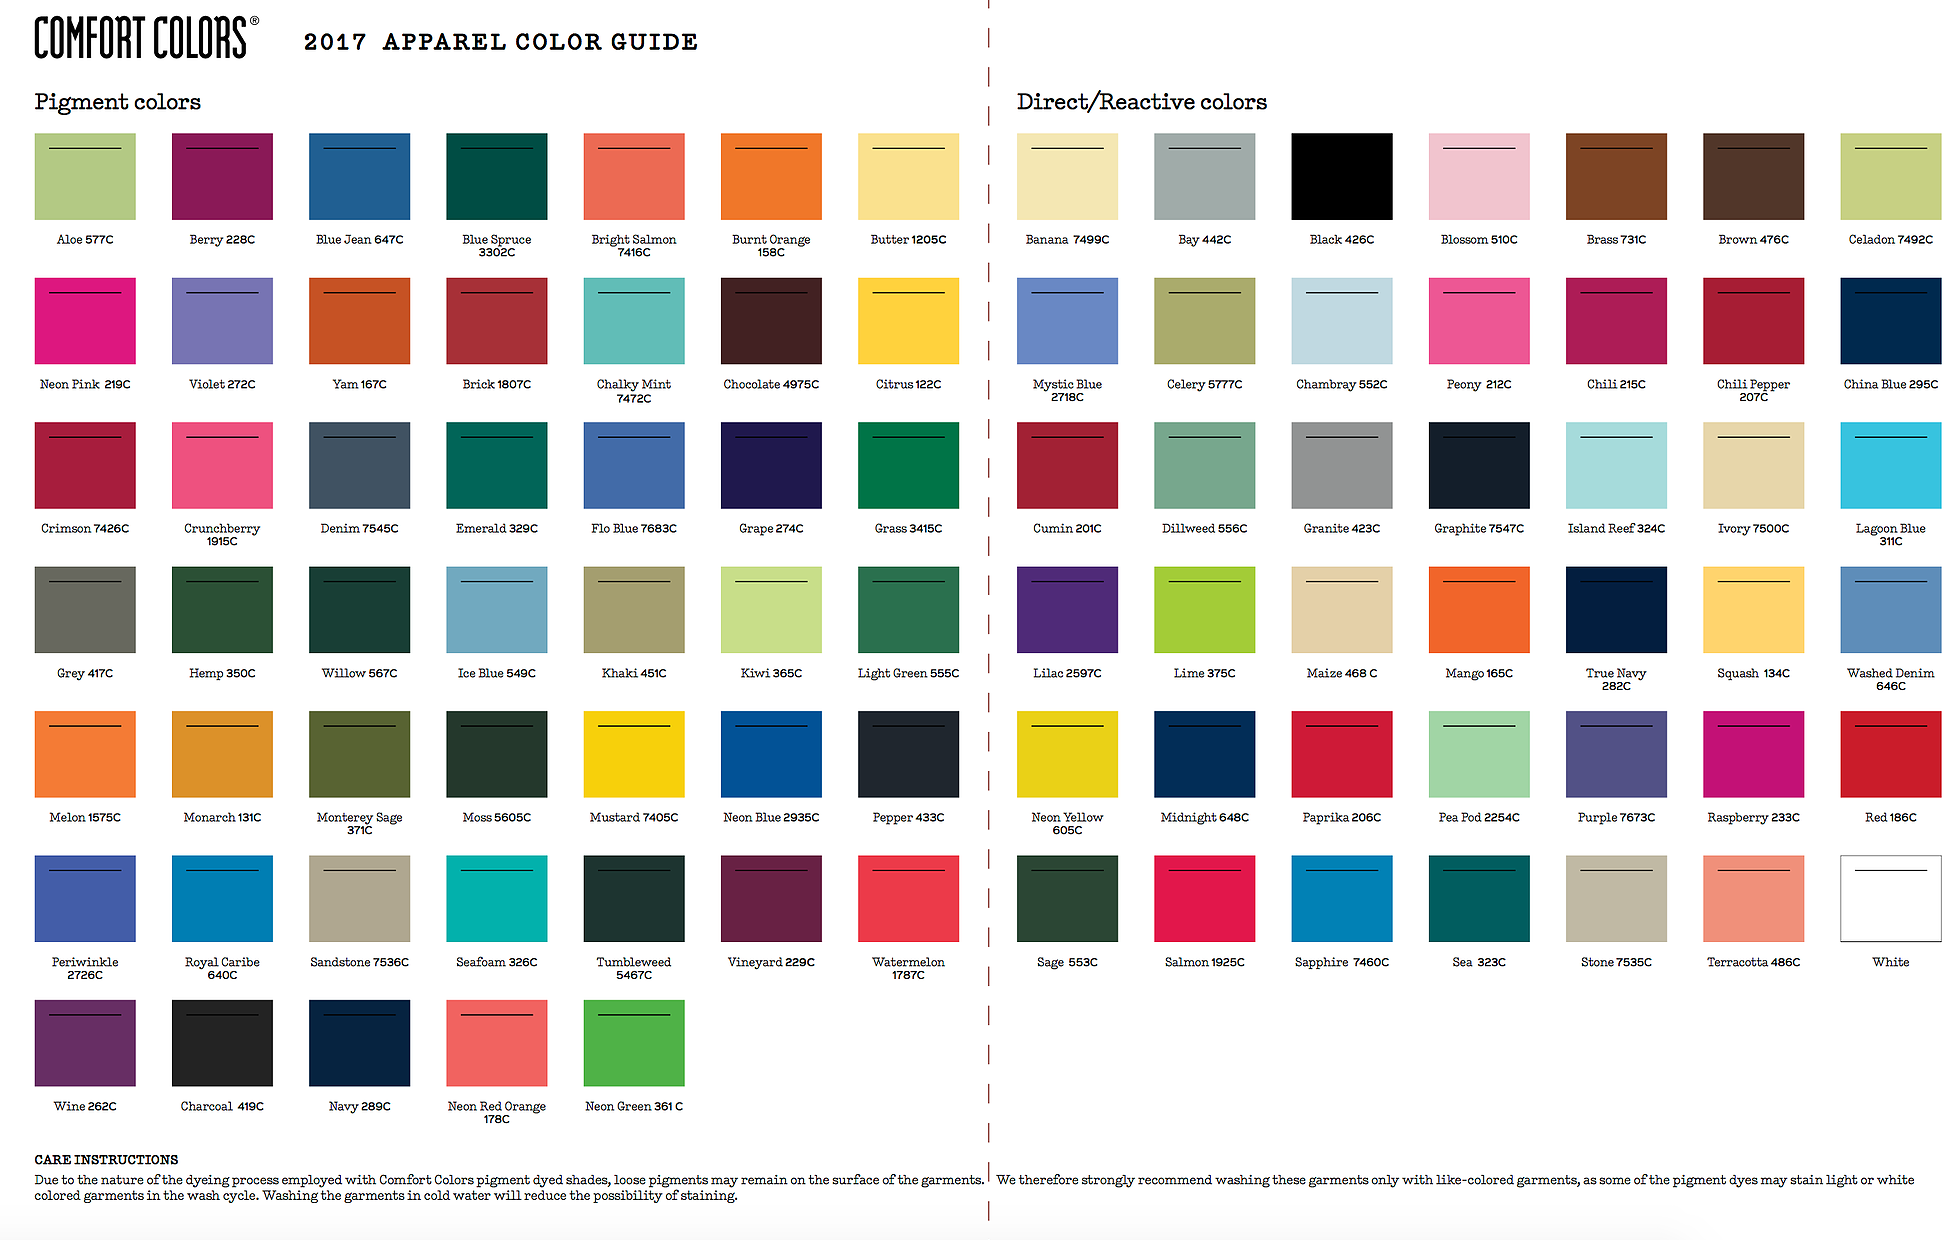 Gildan Colour Chart 2017